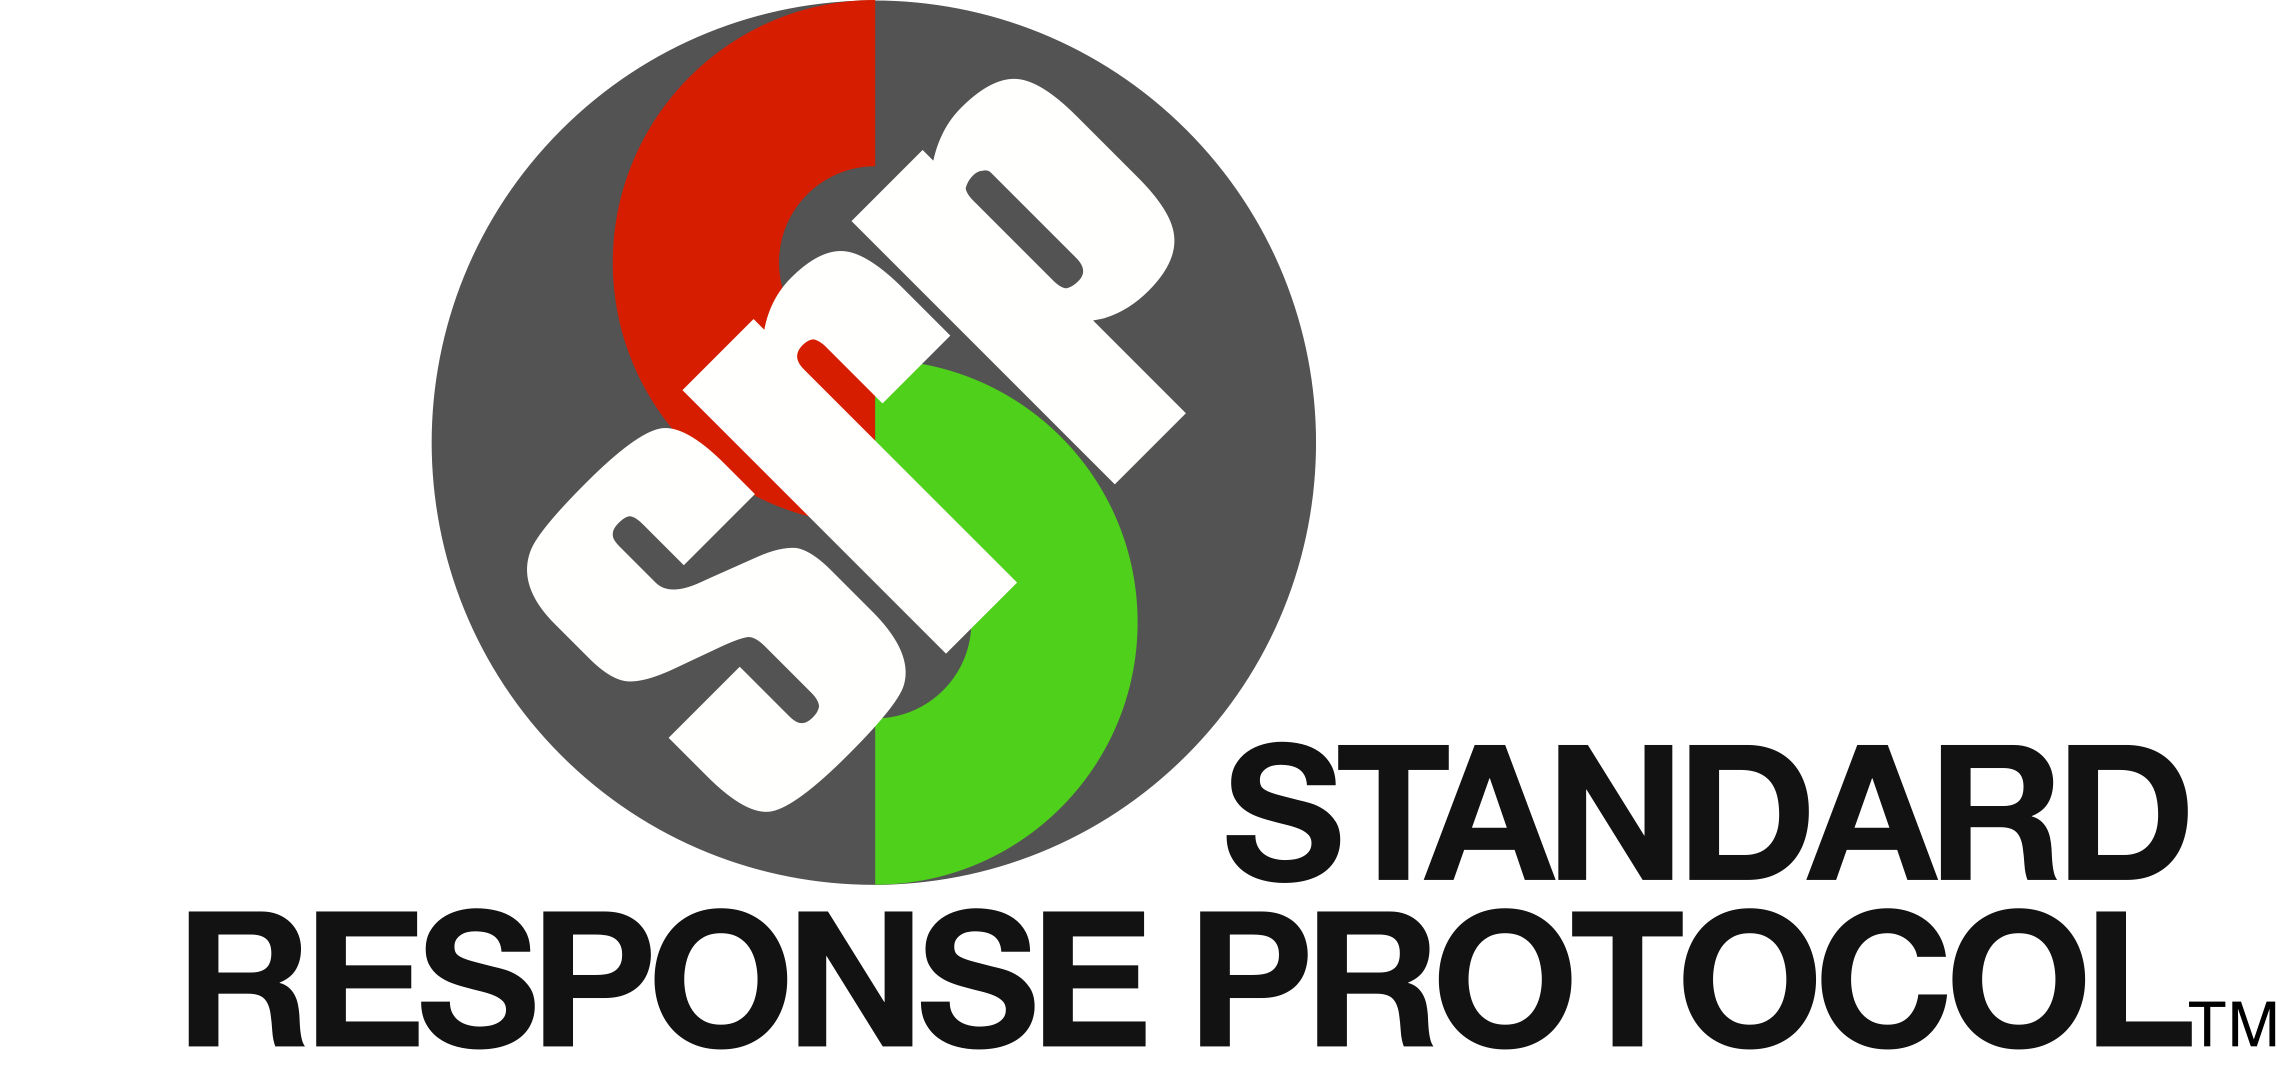 Standard Response Protocol Logo